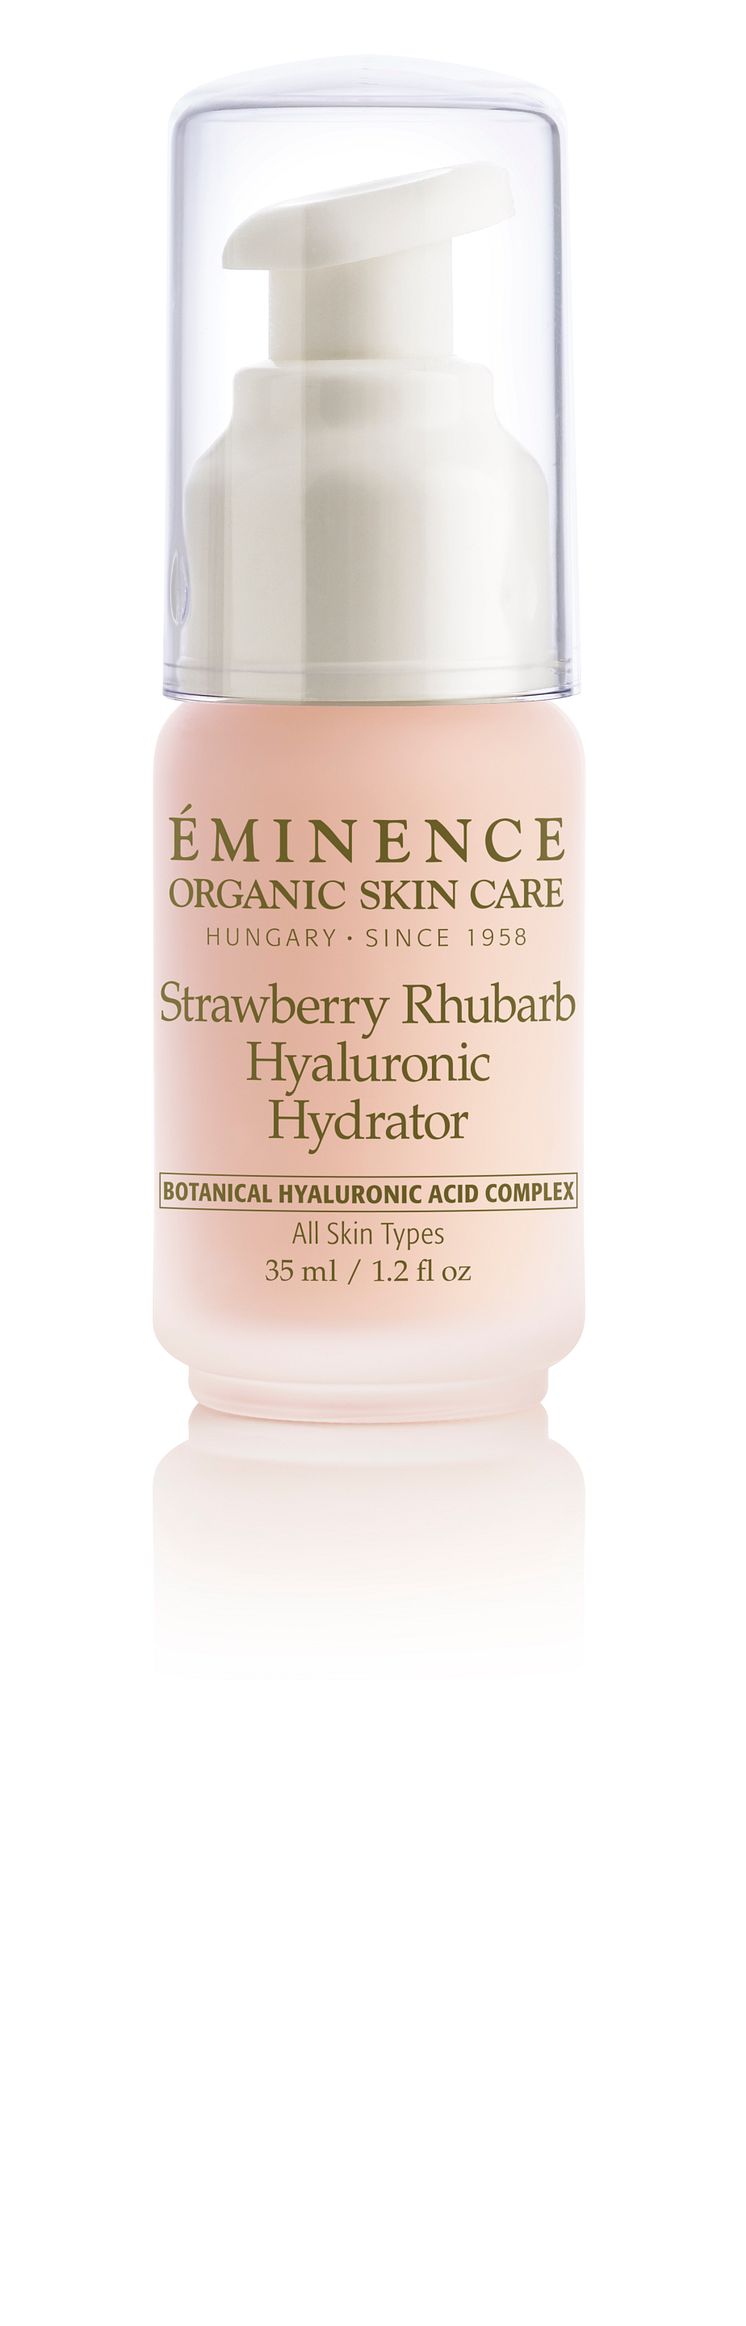 Eminence Strawberry Rhubarb Hyaluronic Hydrator